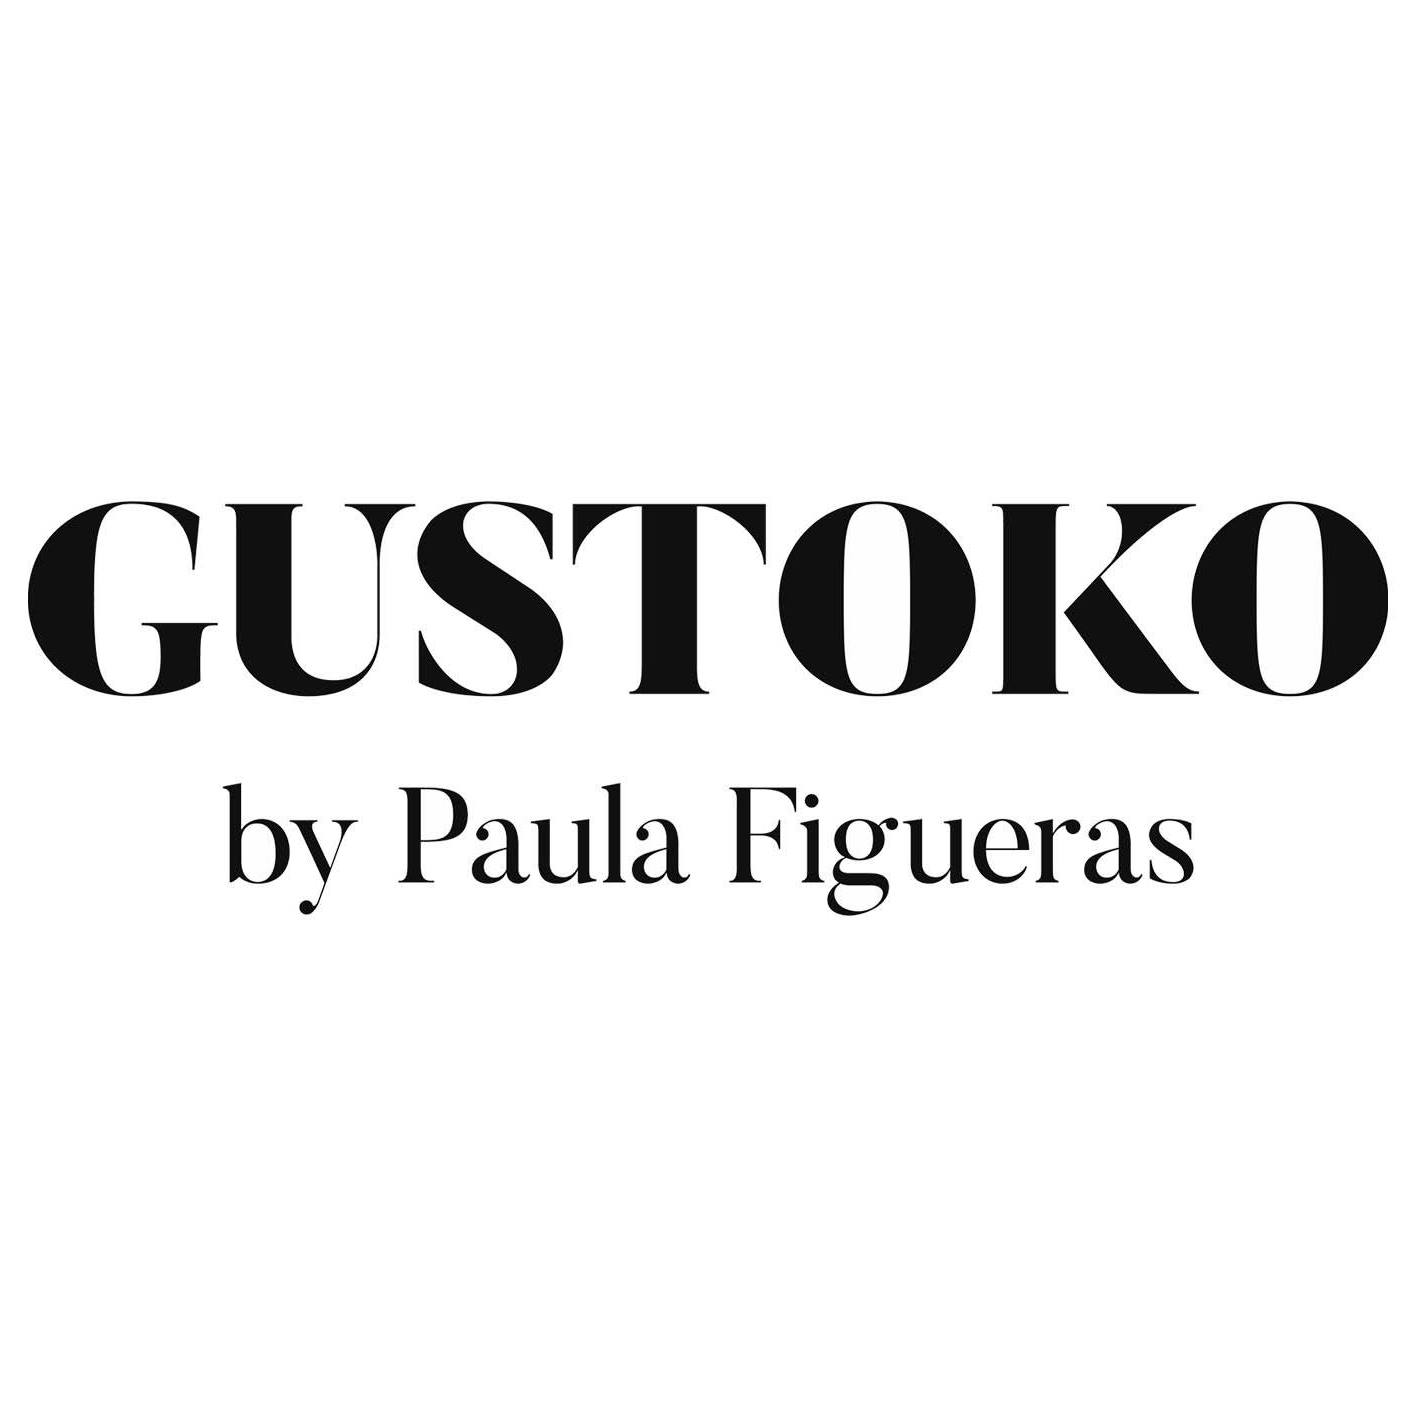 GUSTOKO by Paula Figueras